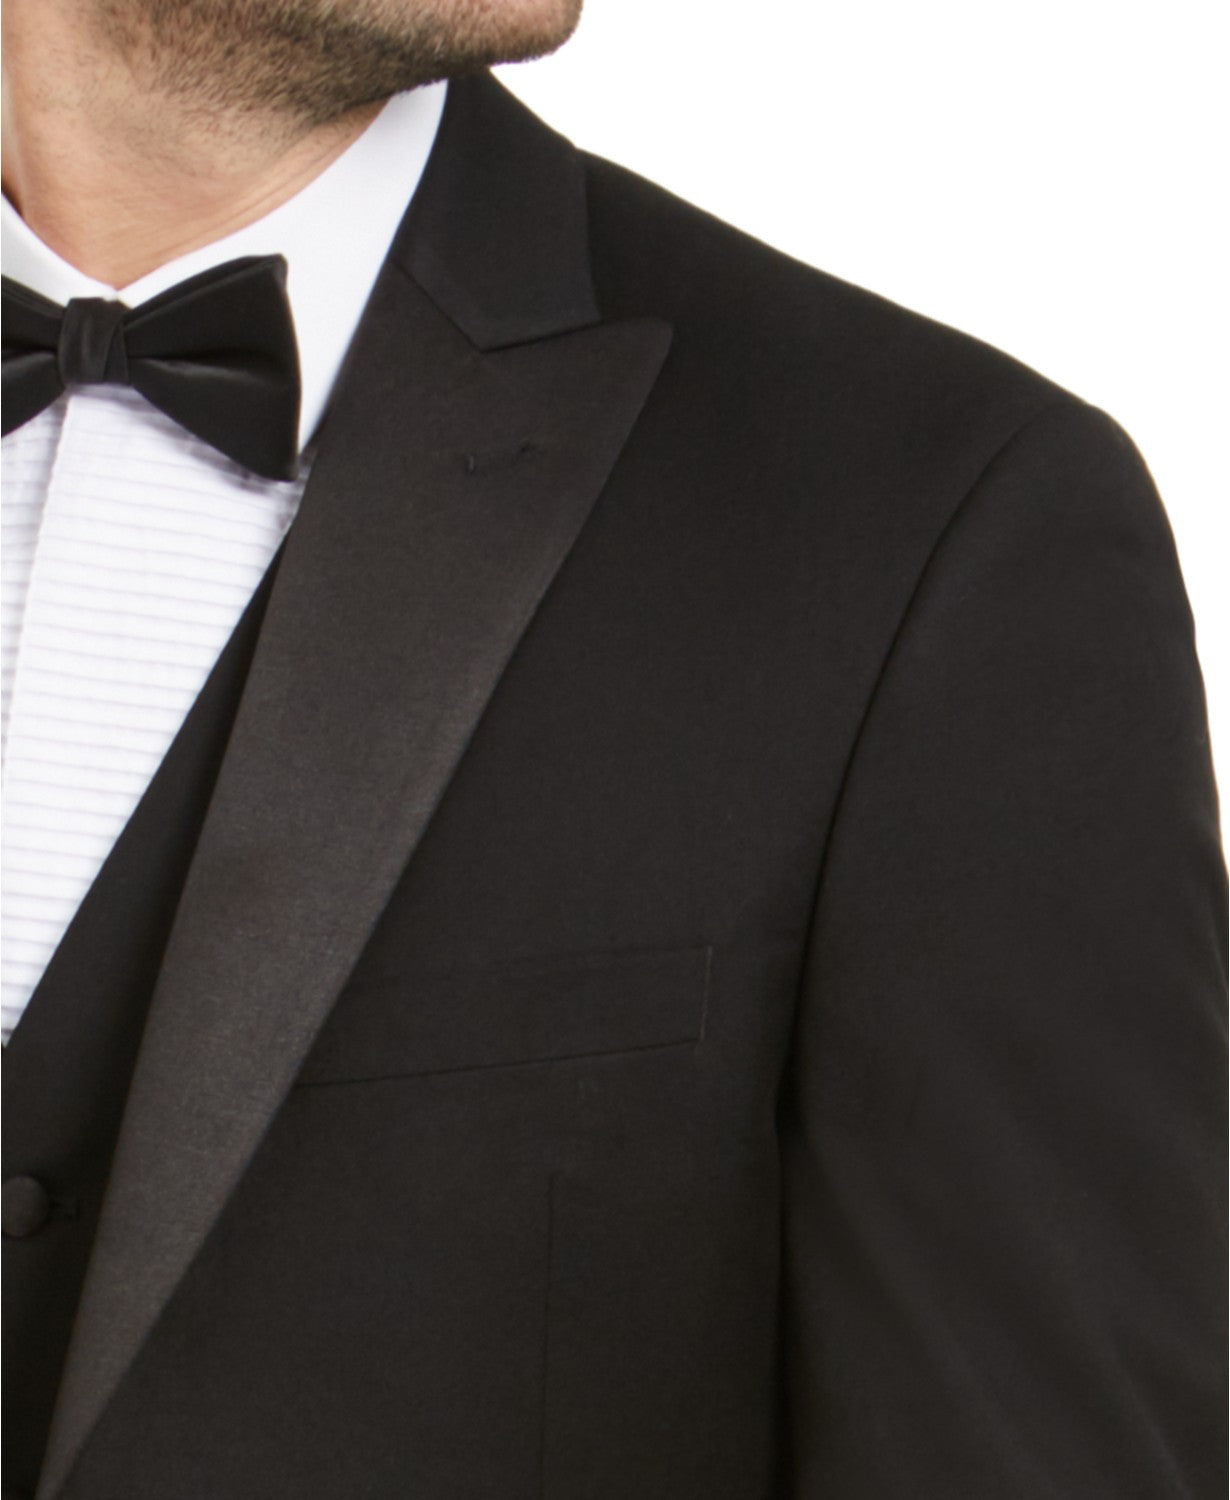 Alfani Men's Black Tuxedo Suit 38S / 30 x 30 Slim-Fit Stretch Flat Pant